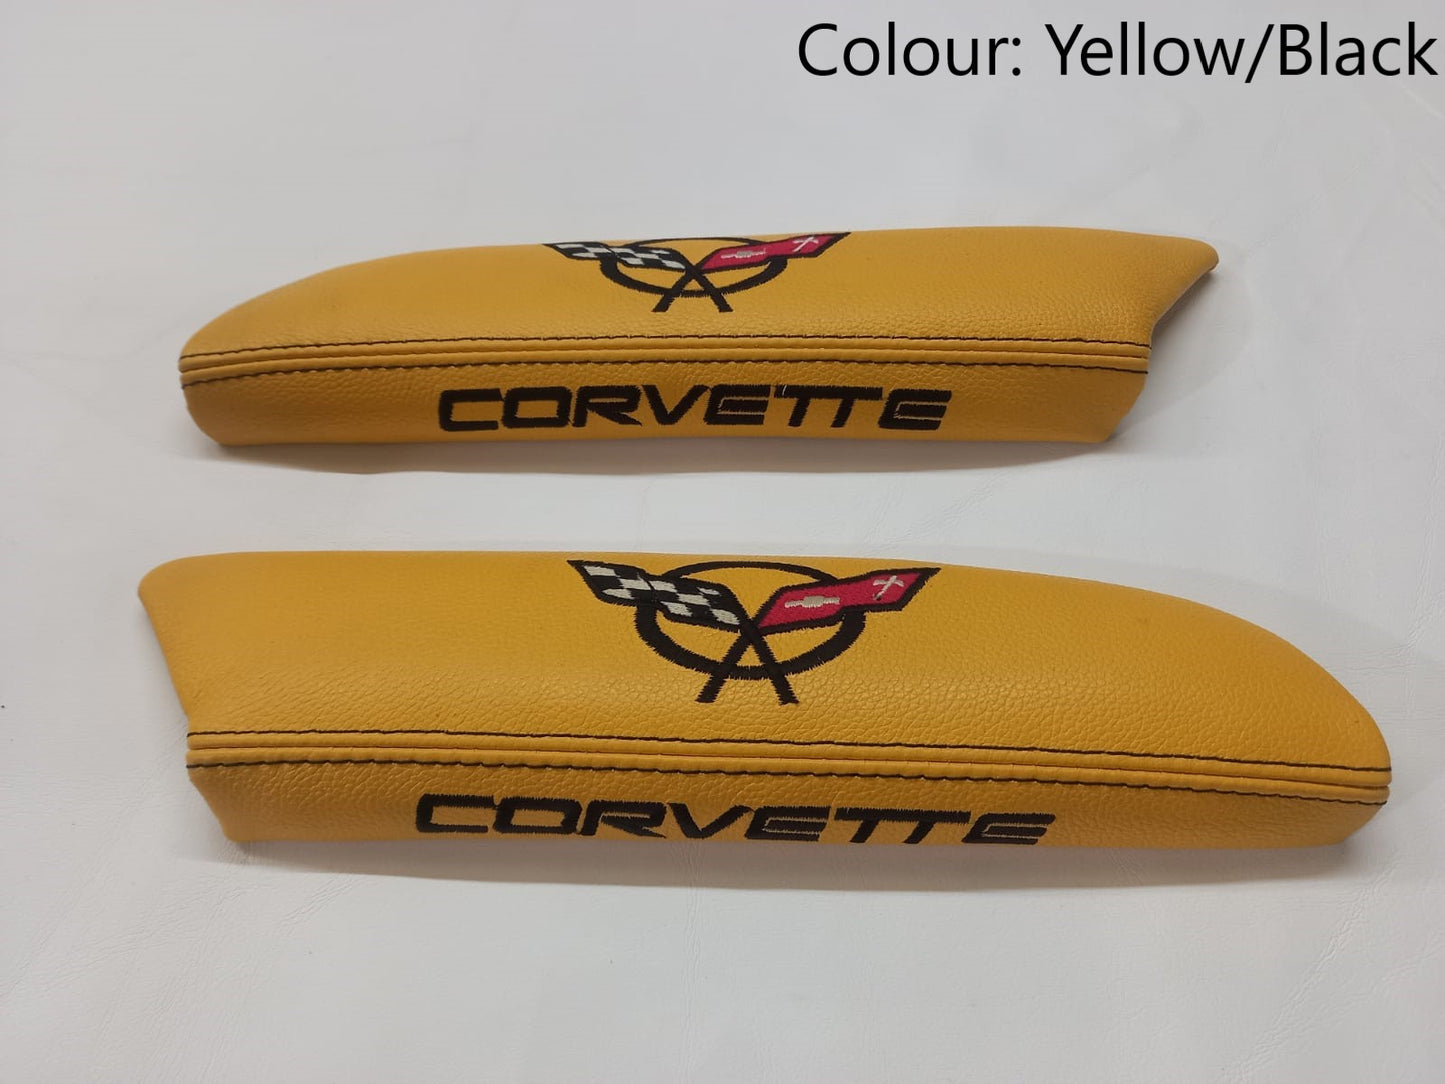 C5 Corvette - Armrest Genuine Leather